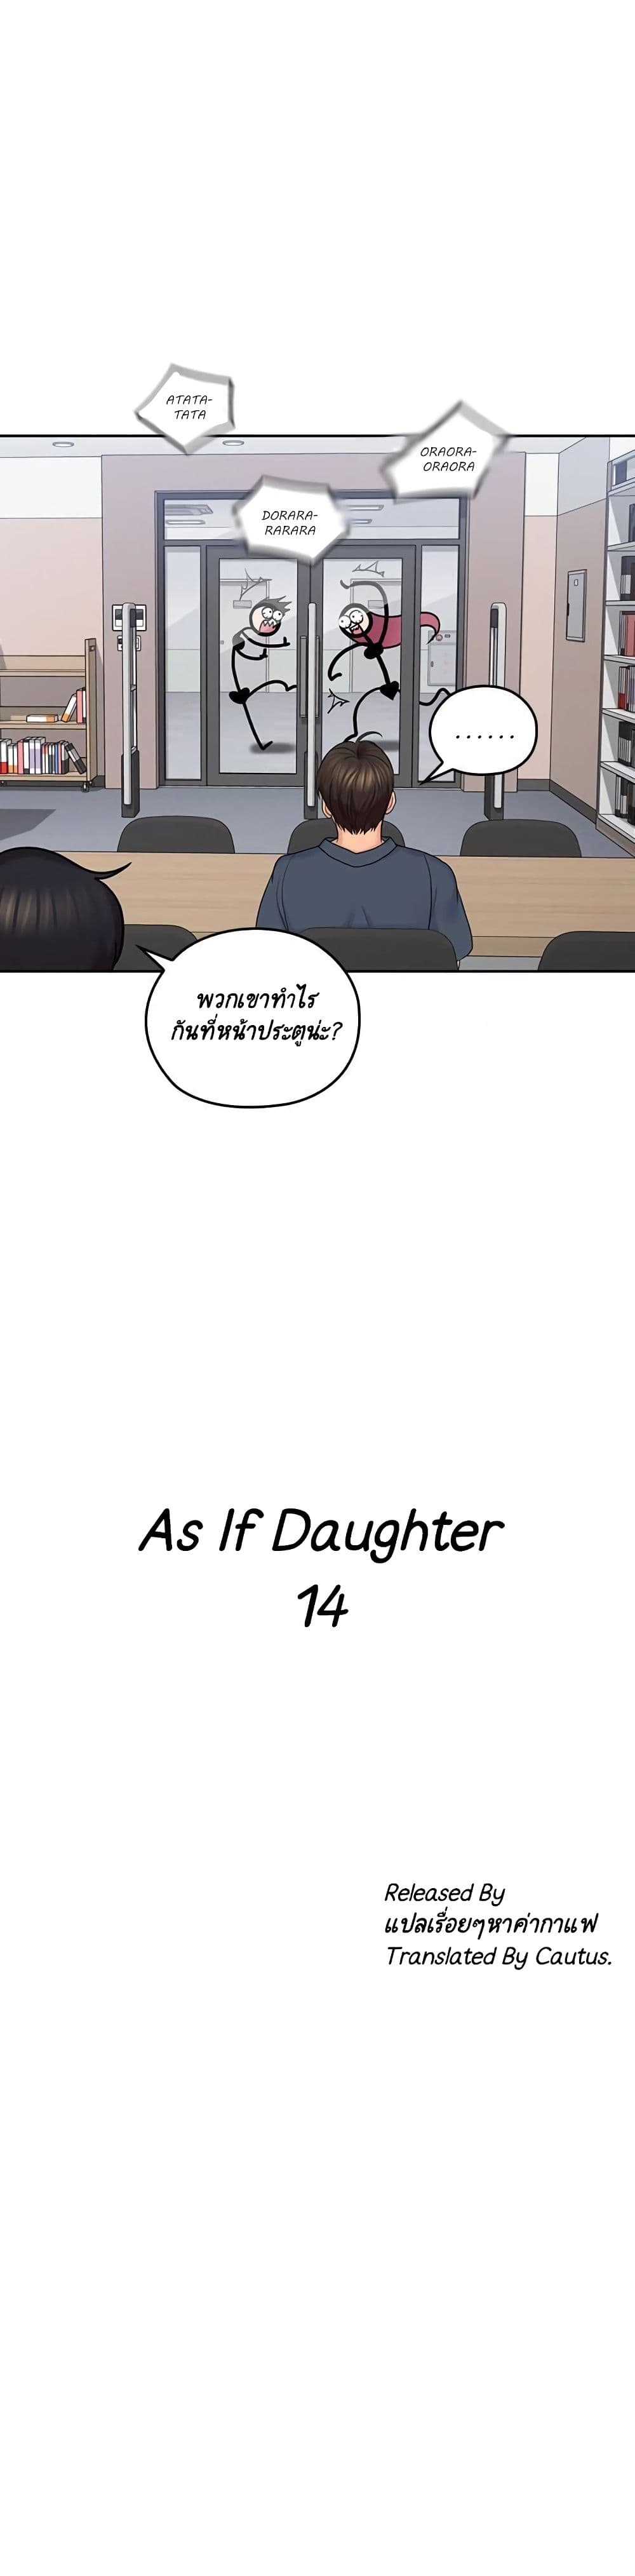 As If Daughter 14 (5)